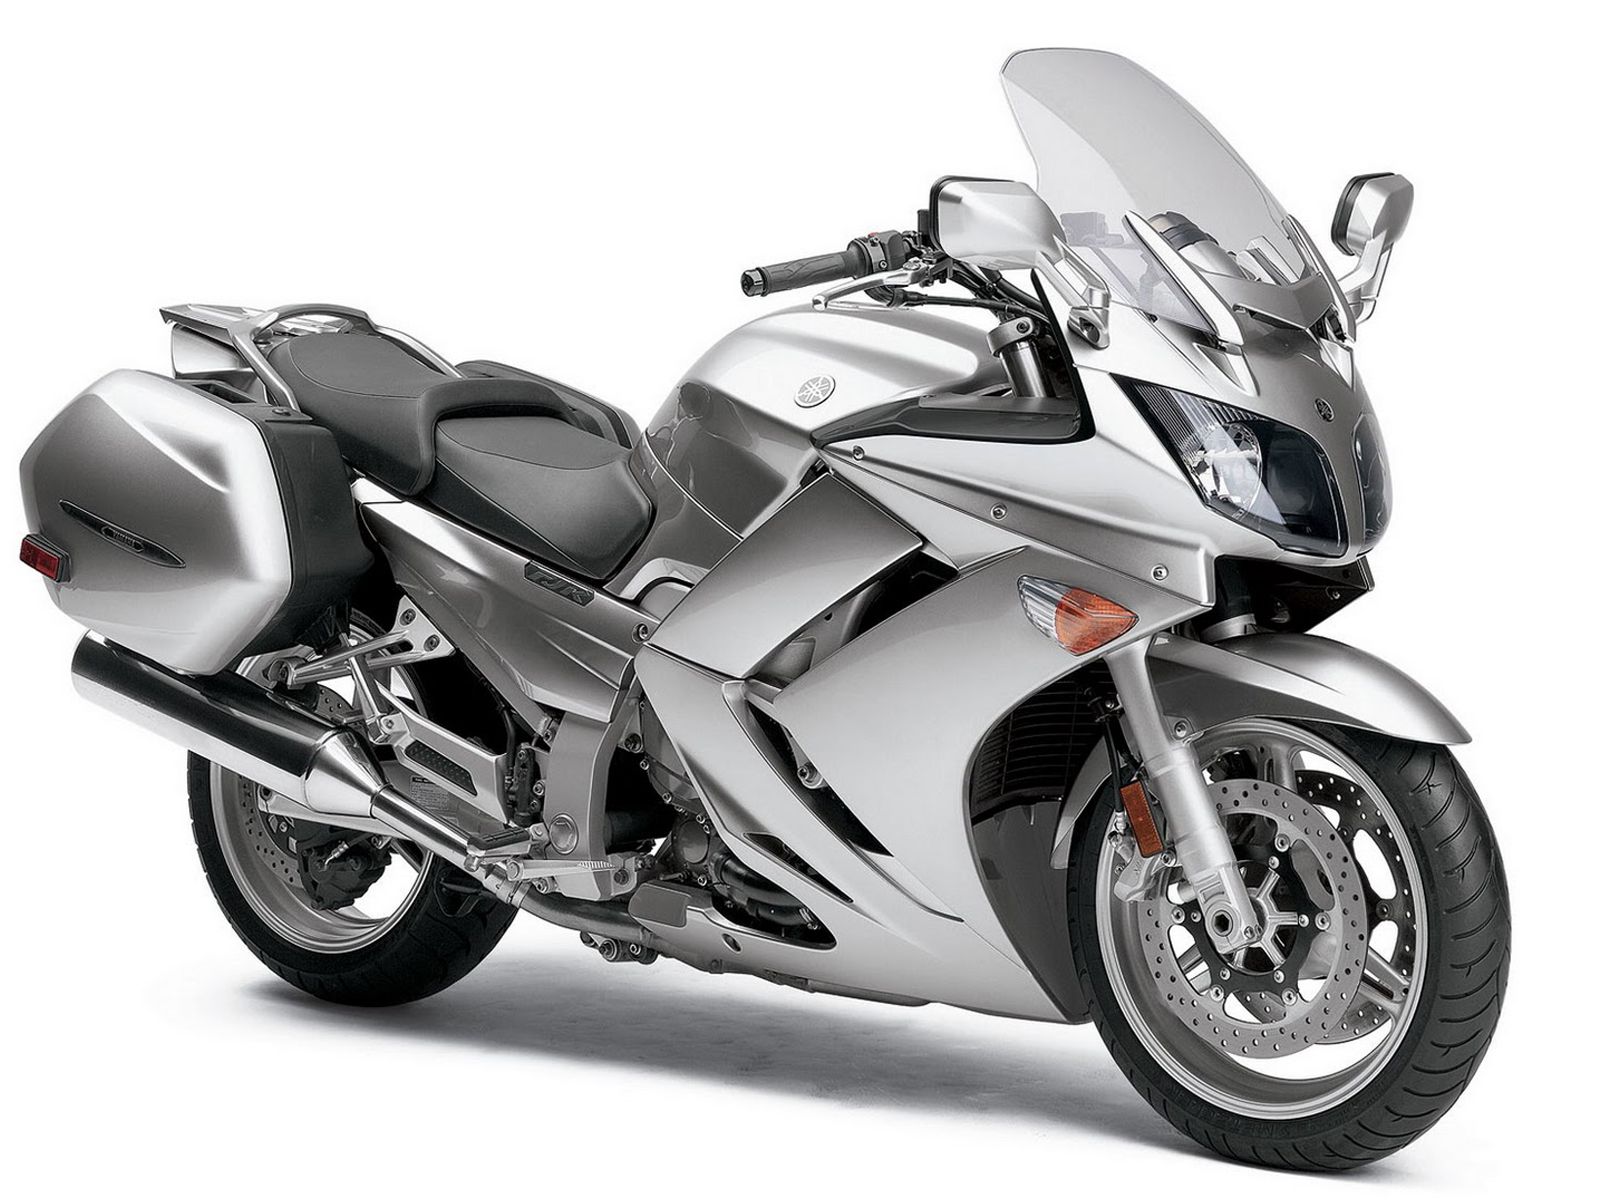 Beautiful Yamaha FJR1300 2012. Custom Motorcycles & Classic Motorcycles. Motorcycle, Touring motorcycles, Yamaha